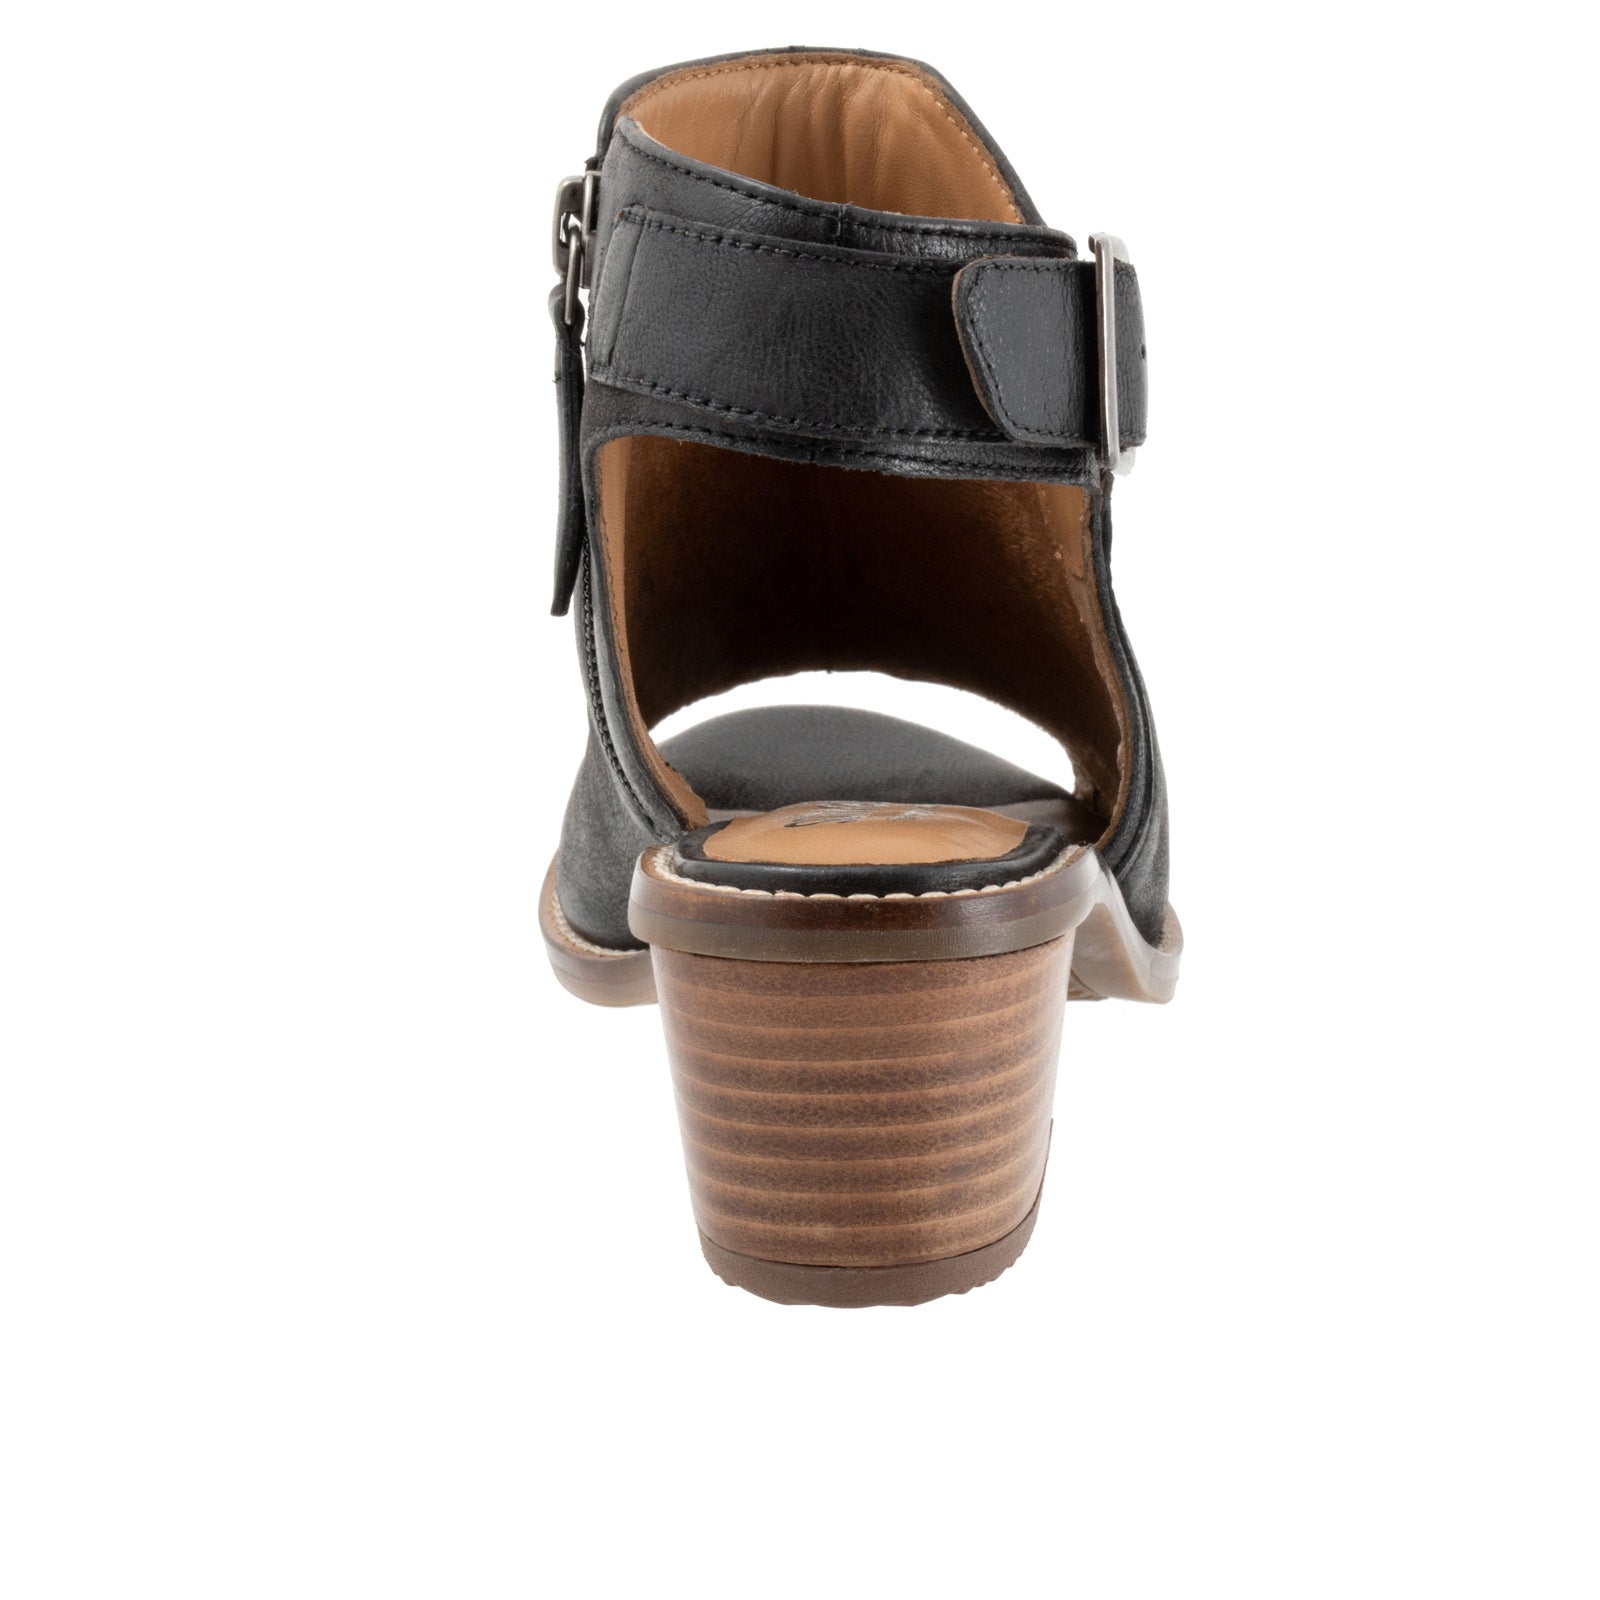 Softwalk Novara S2314-004 Womens Black Narrow Leather Heeled Sandals Boots